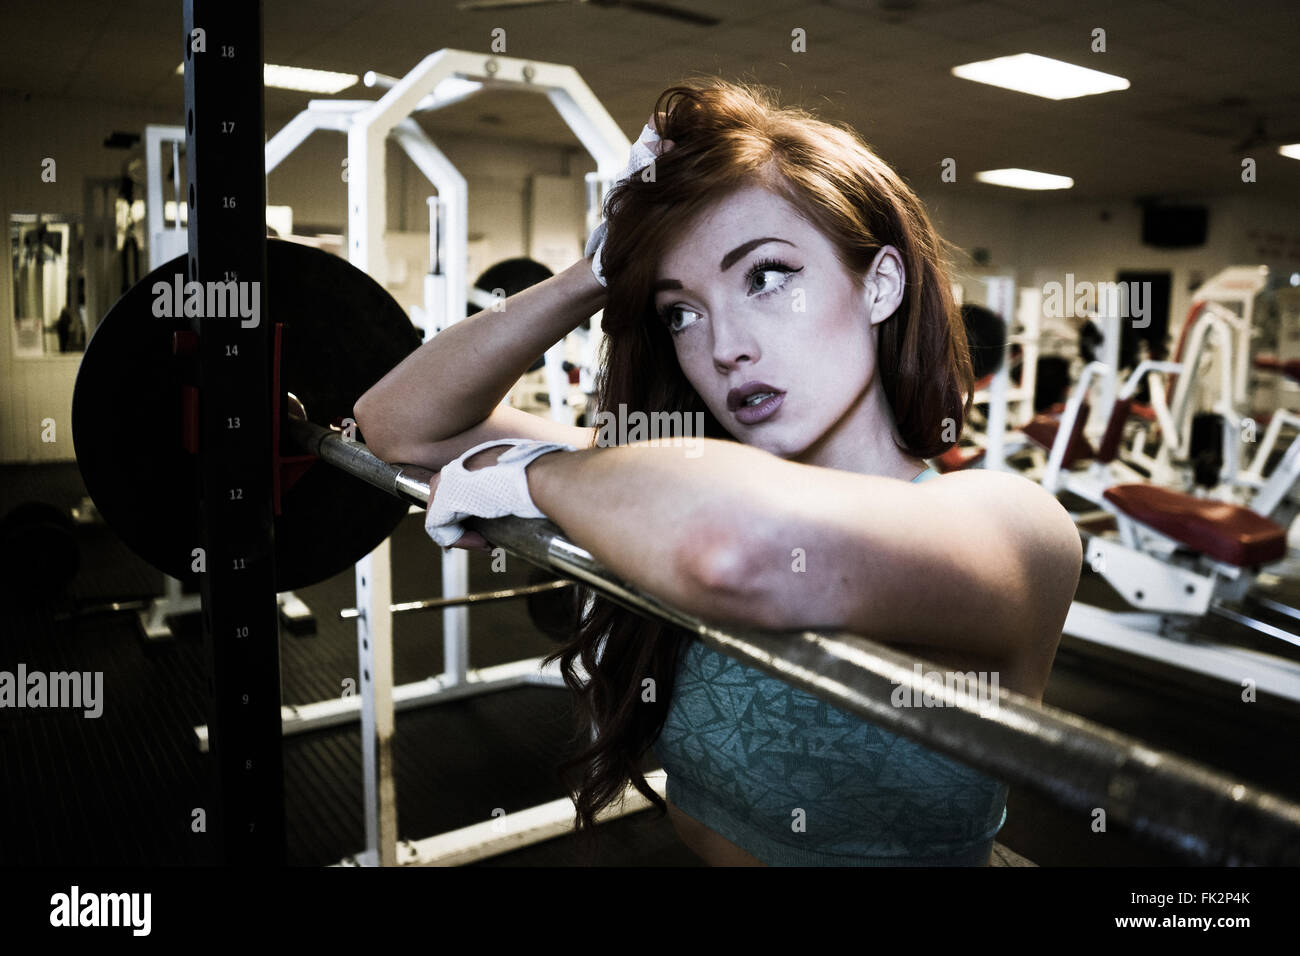 Female fitness model posing on a squats rack Stock Photo